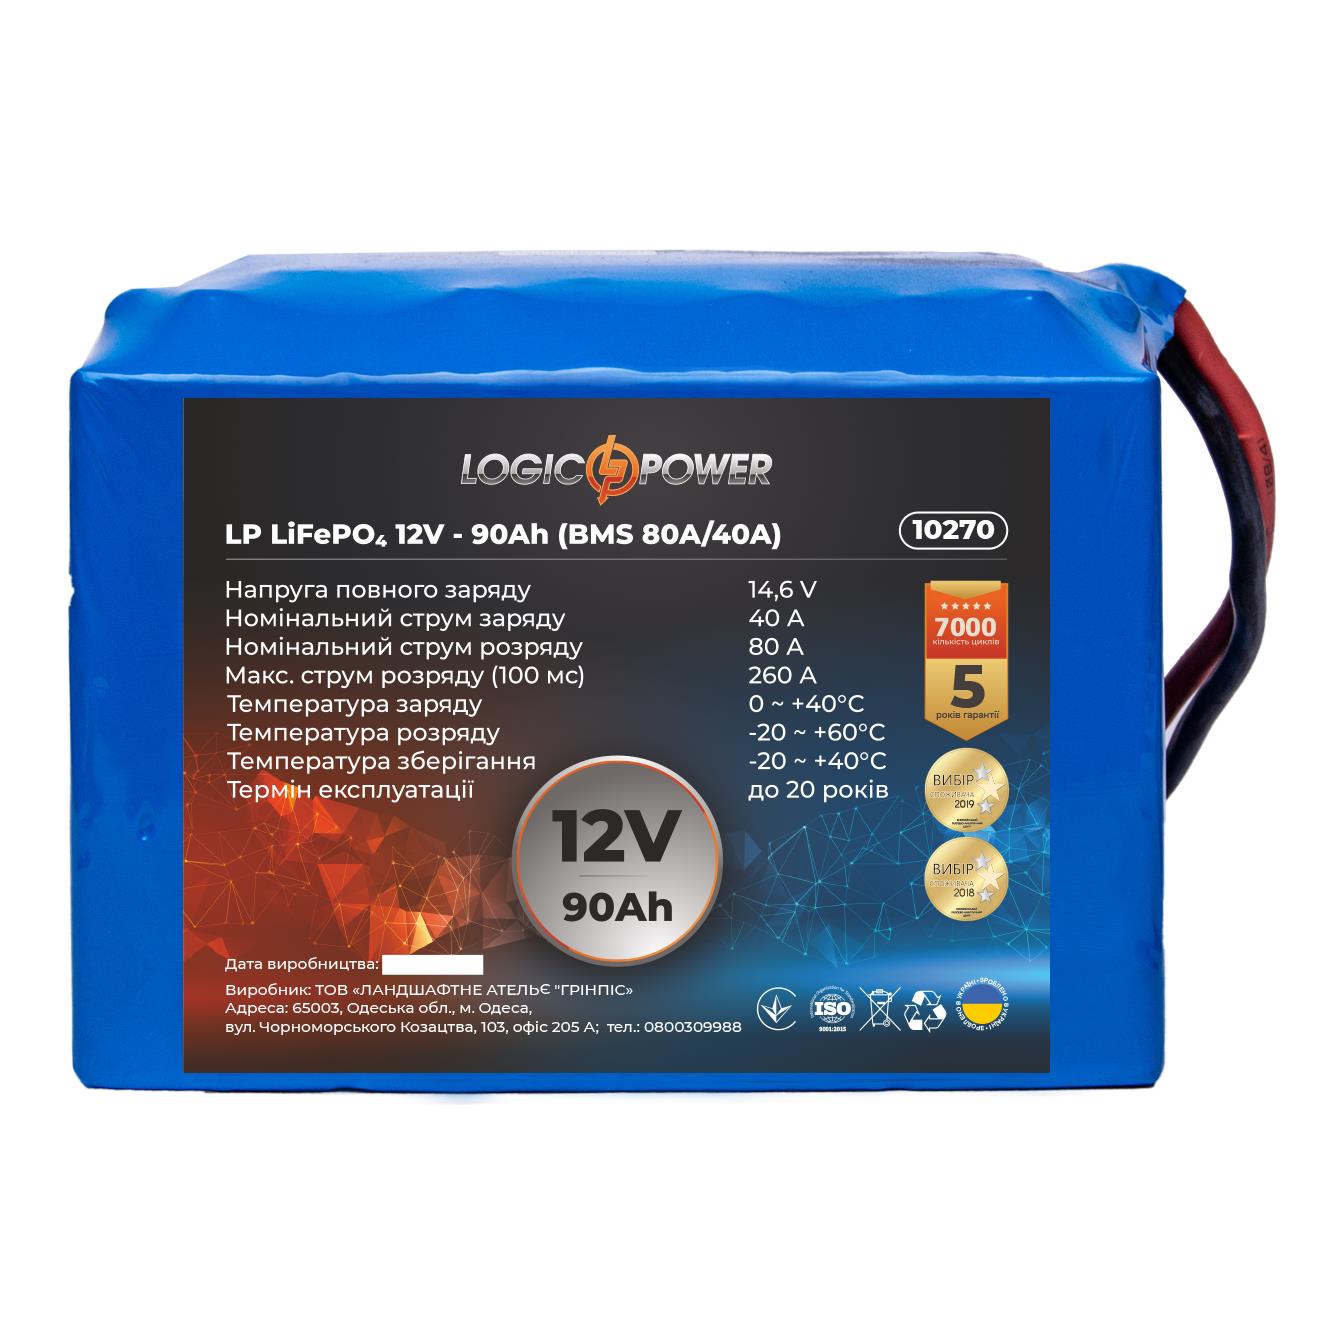 LogicPower LP LiFePO4 12V - 90 Ah (BMS 80A/40A) (10270)